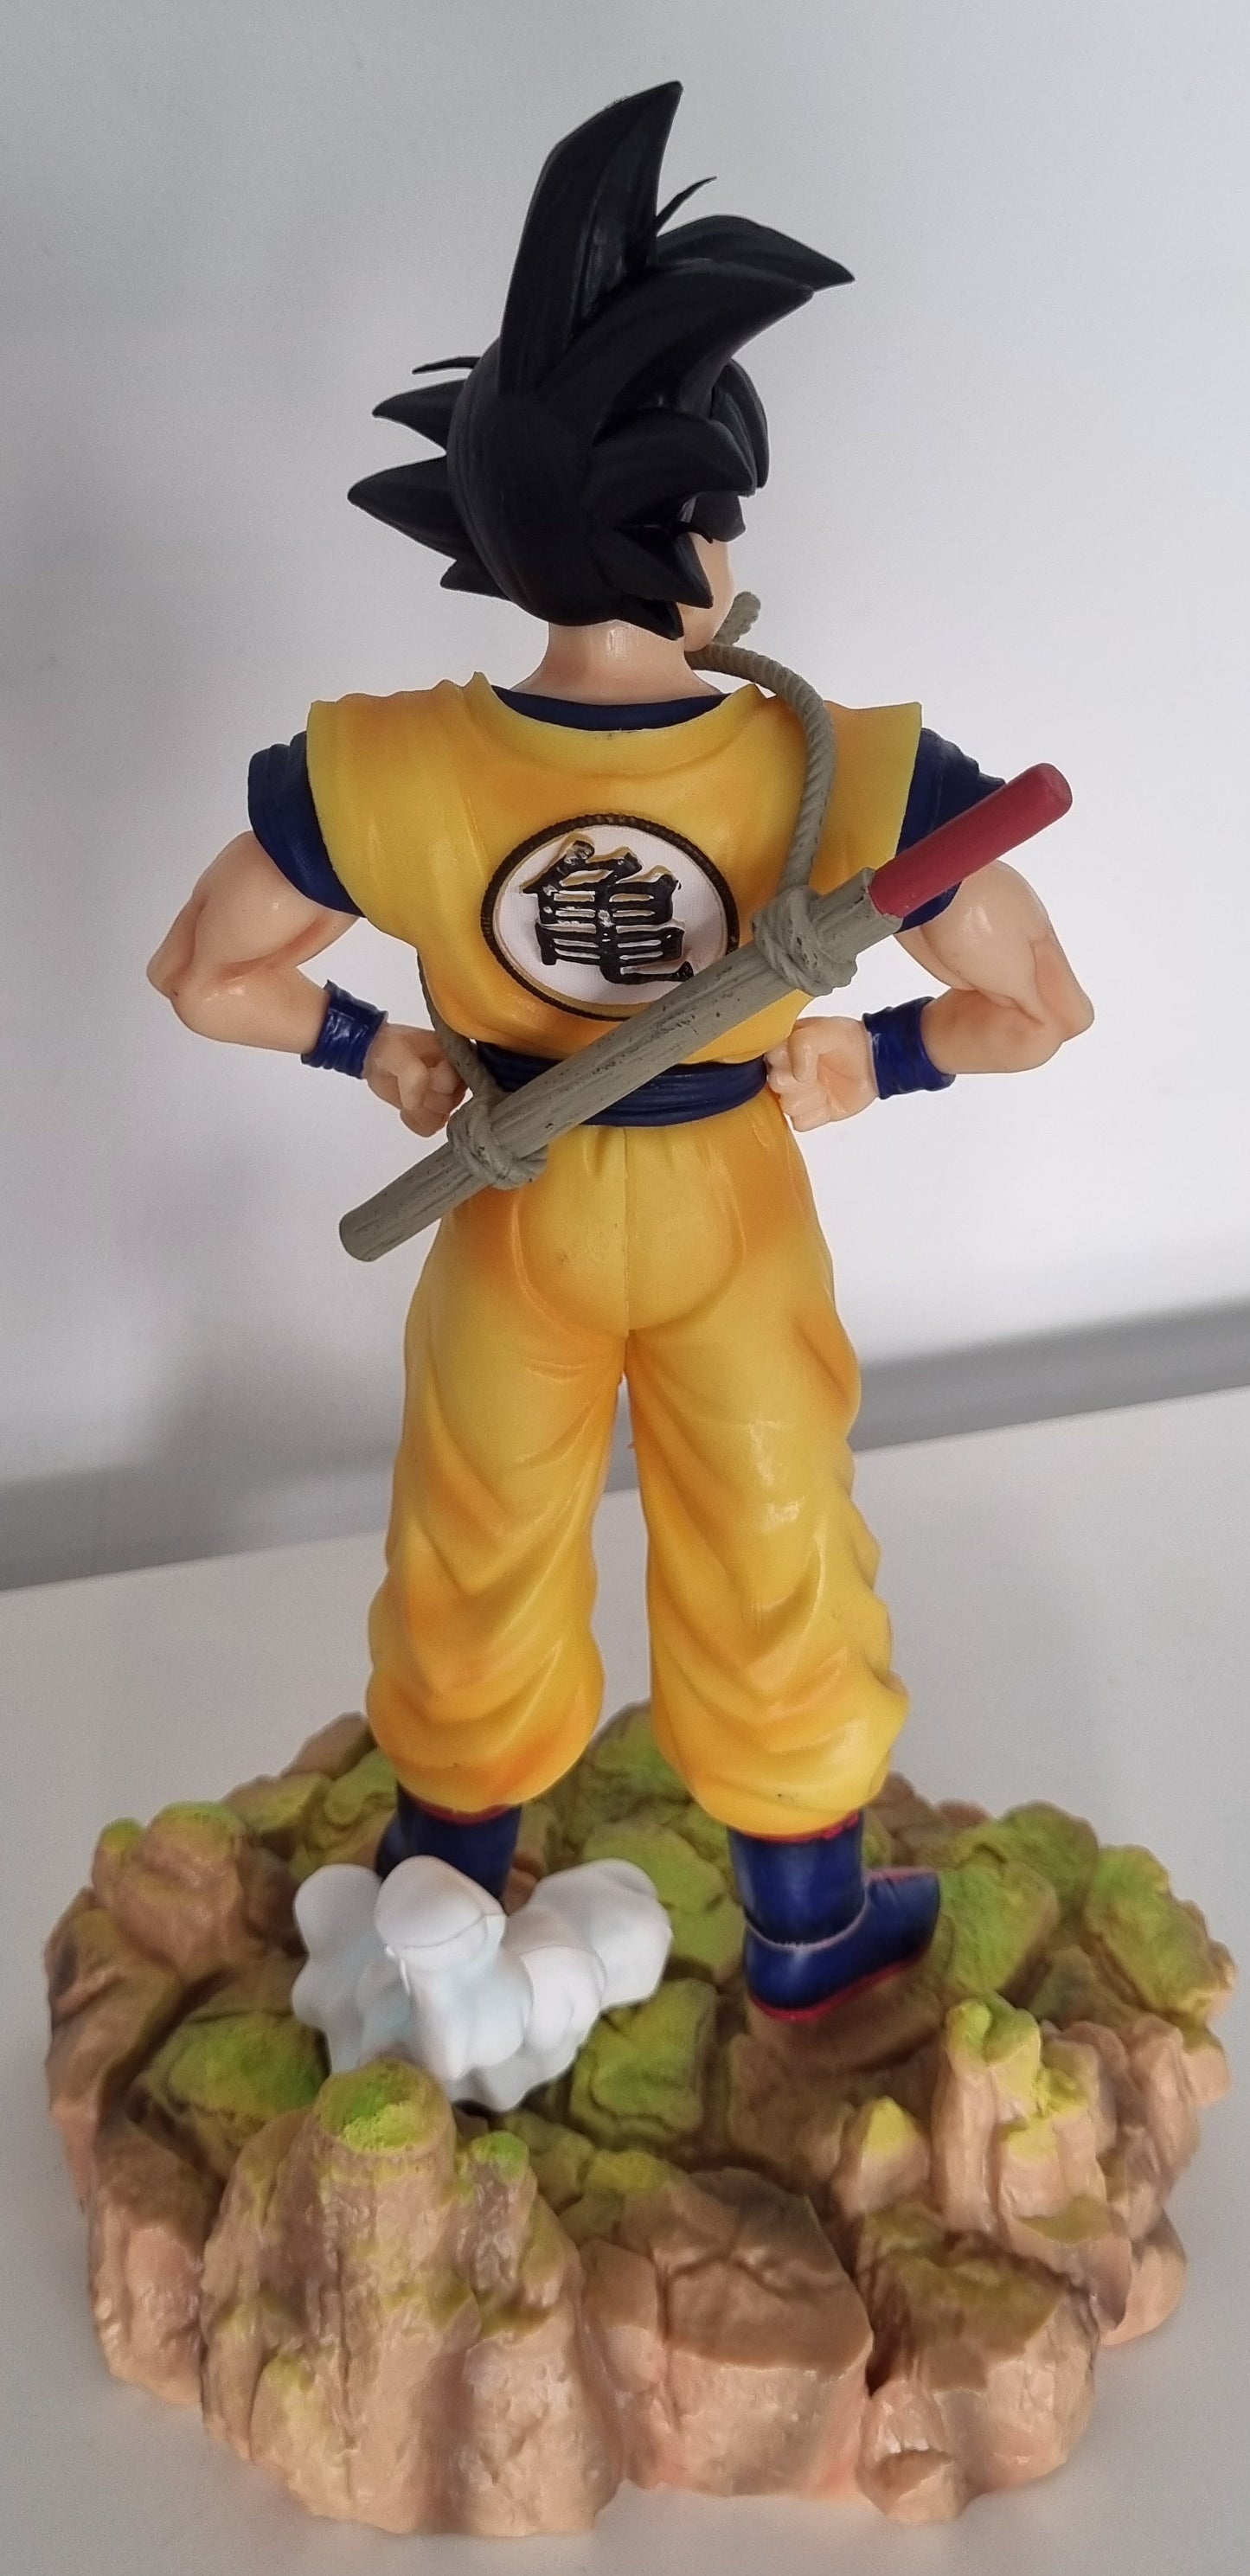 Goku, figura coleccionable, Dragon Ball, anime, estatua, personaje de anime, Super Saiyan, Goku figura, colección de anime, acción.